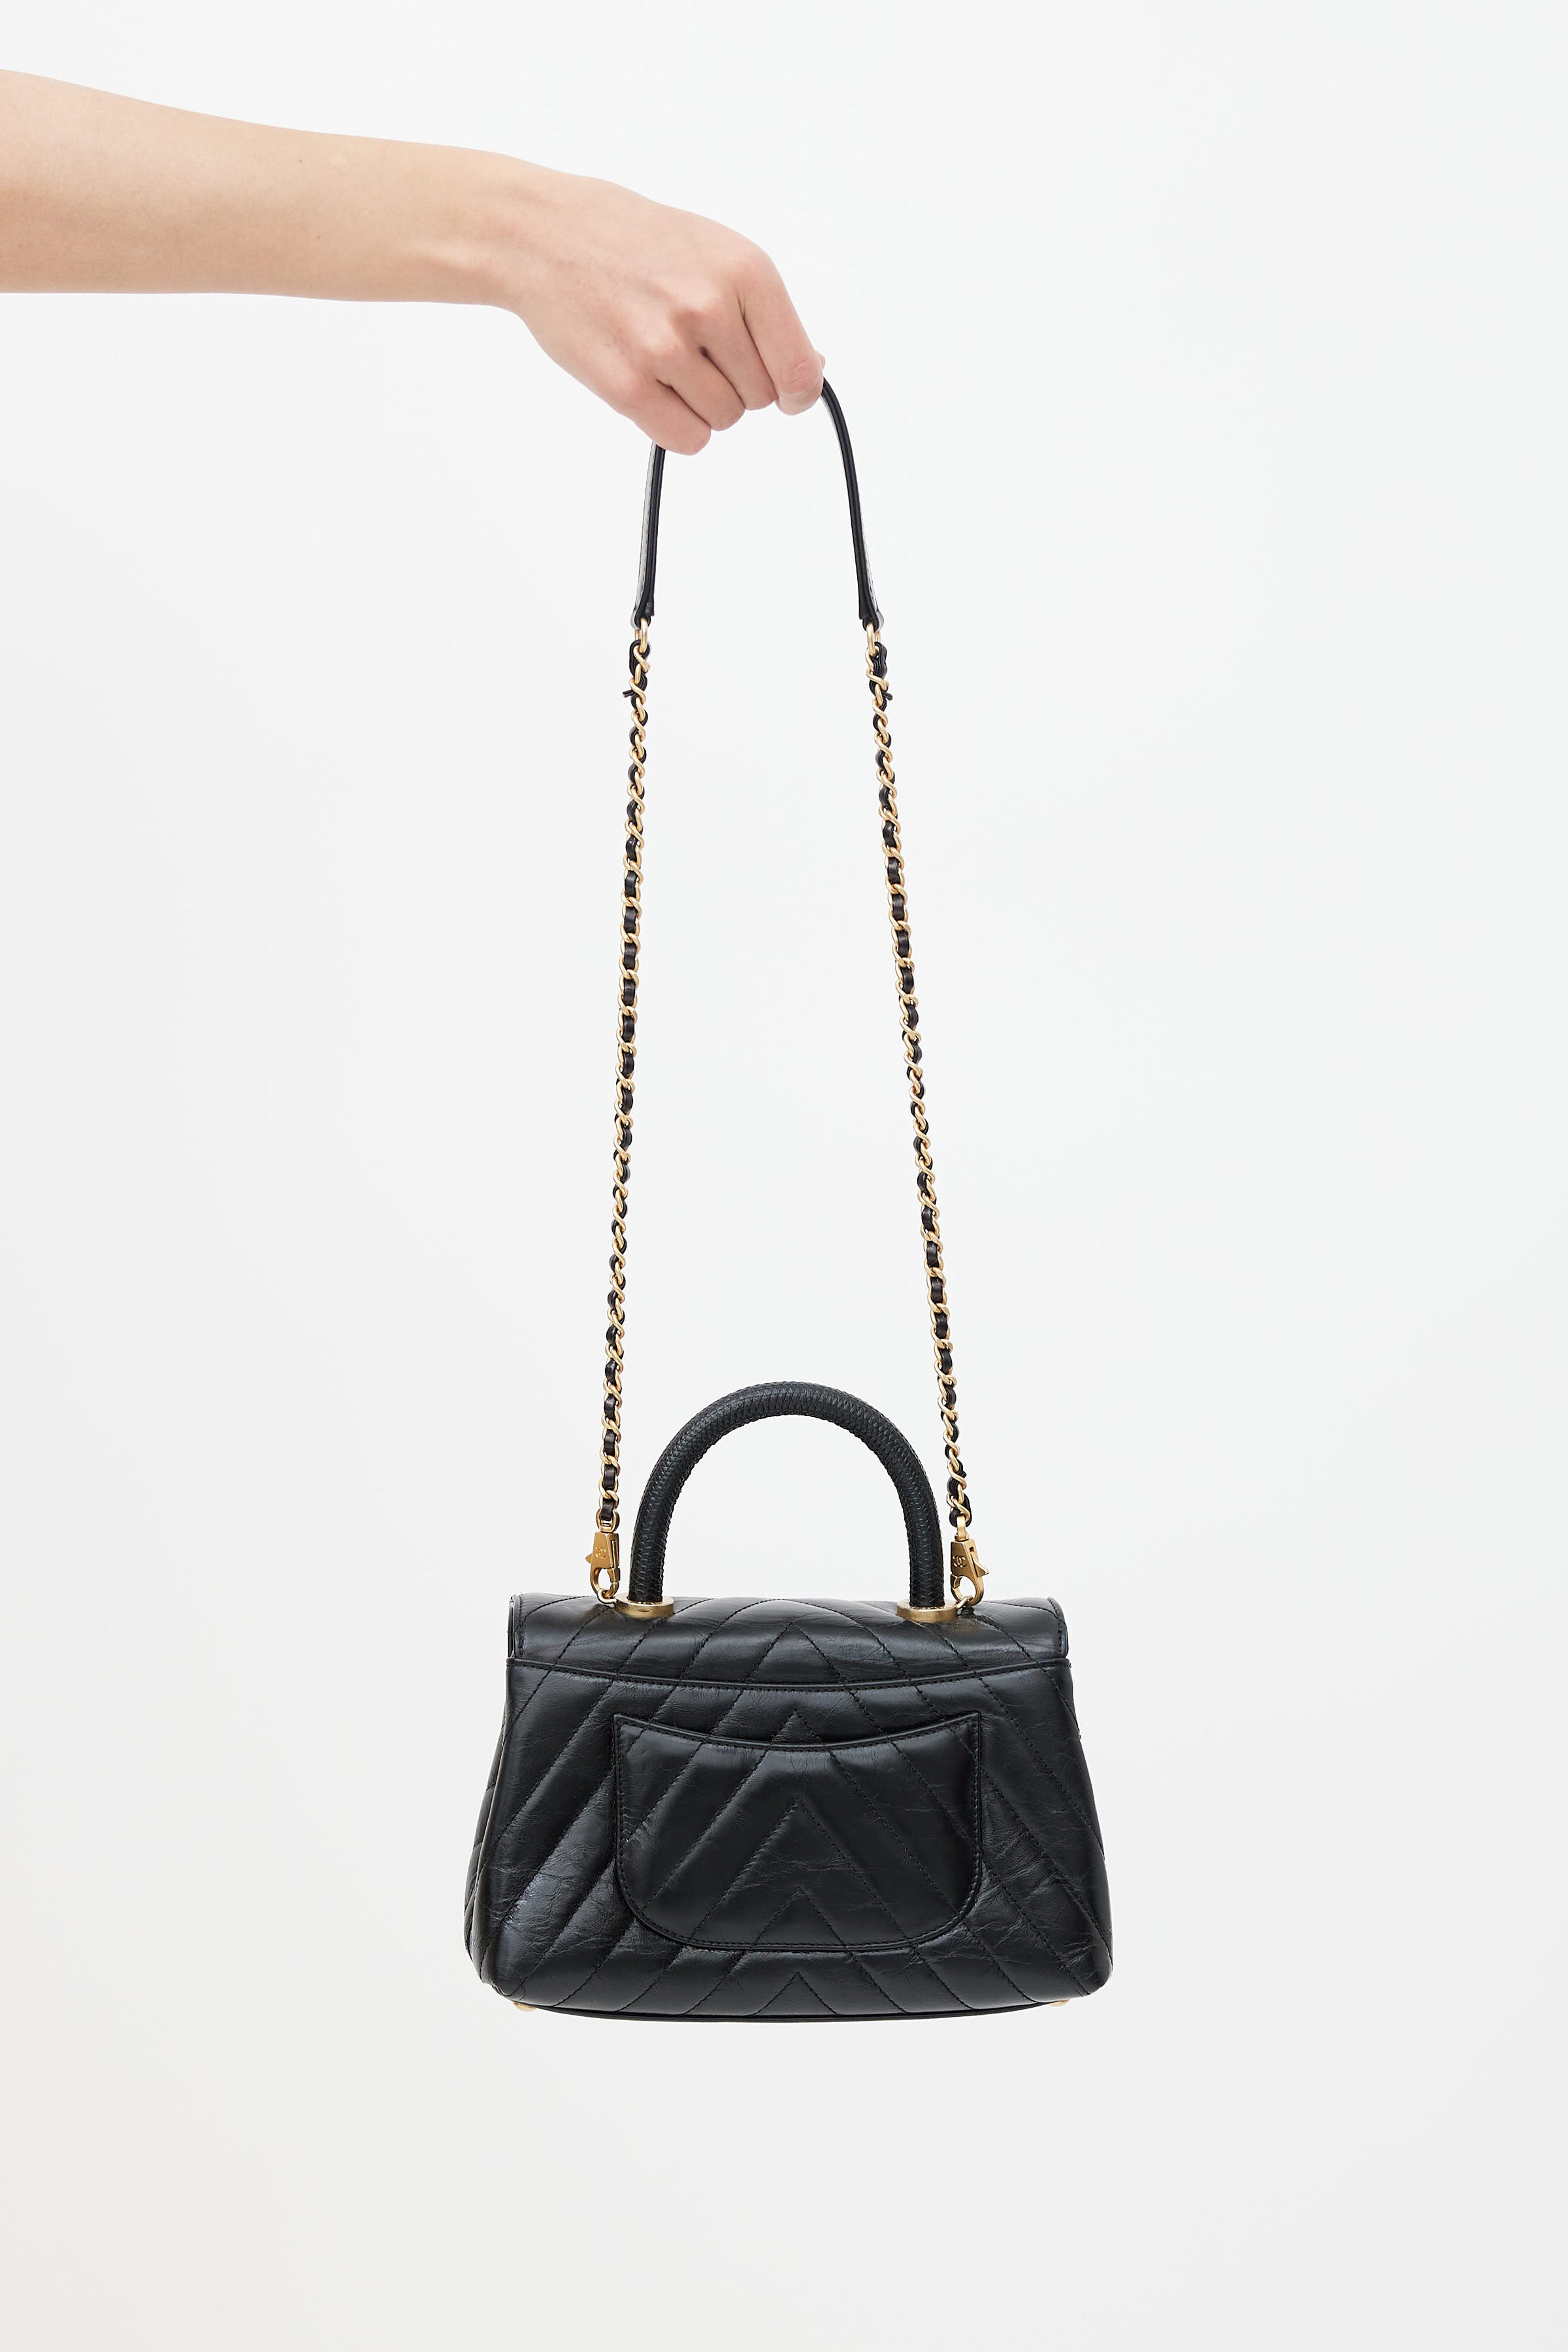 Chanel // Black Aged Calfskin Chevron Small Coco Lizard Handle Bag 